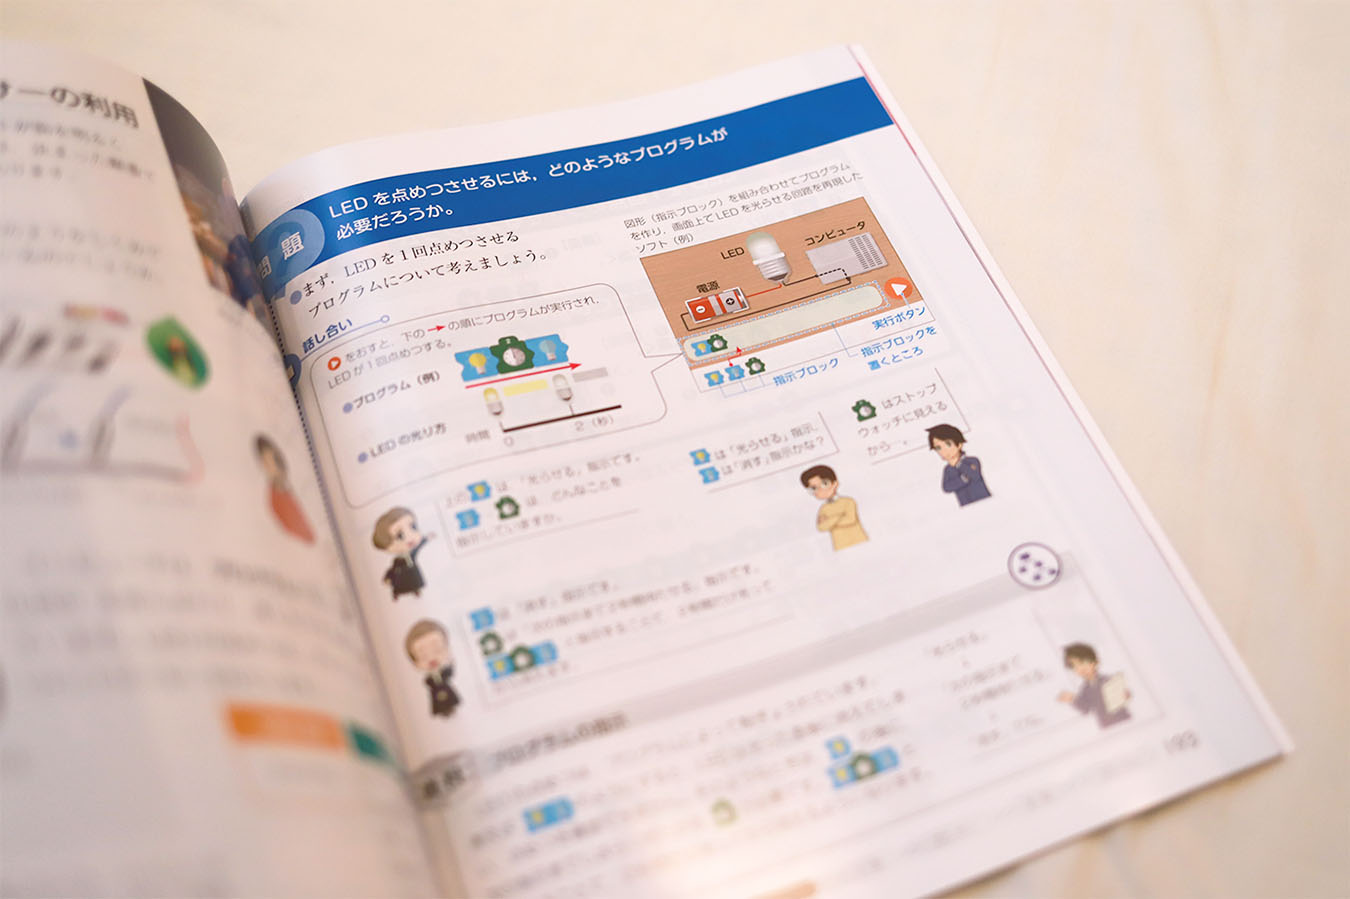 Programming education application “Yokoshiki” was published in an elementary school textbook.